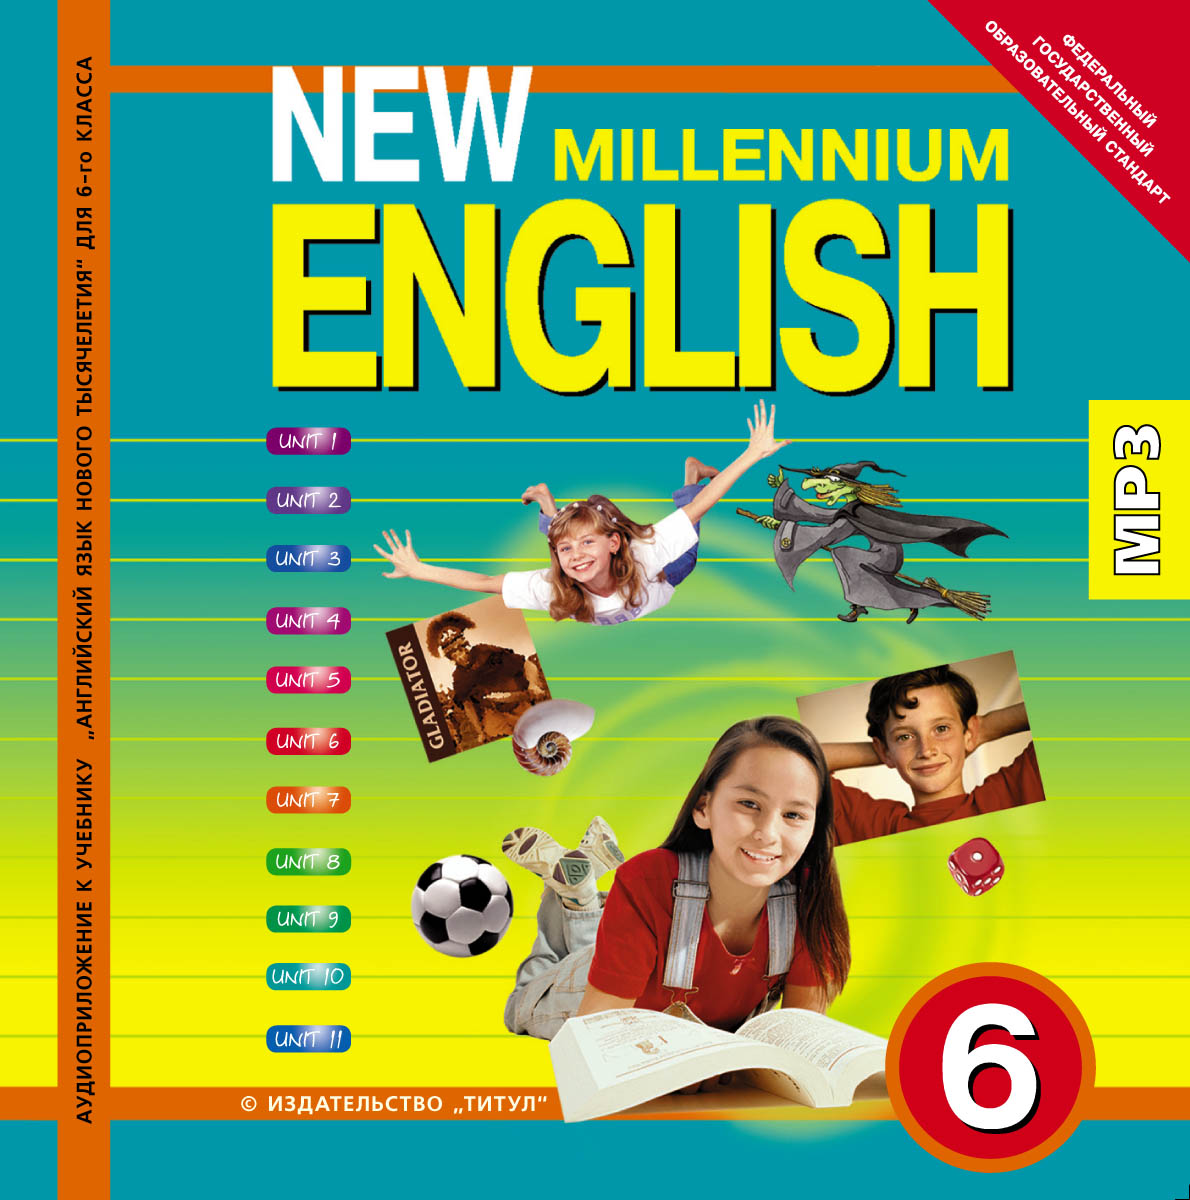 Mille: New Millennium English: 6 /Милли. Английский язык нового тысячелетия. 6 класс (аудиокурс MP3)